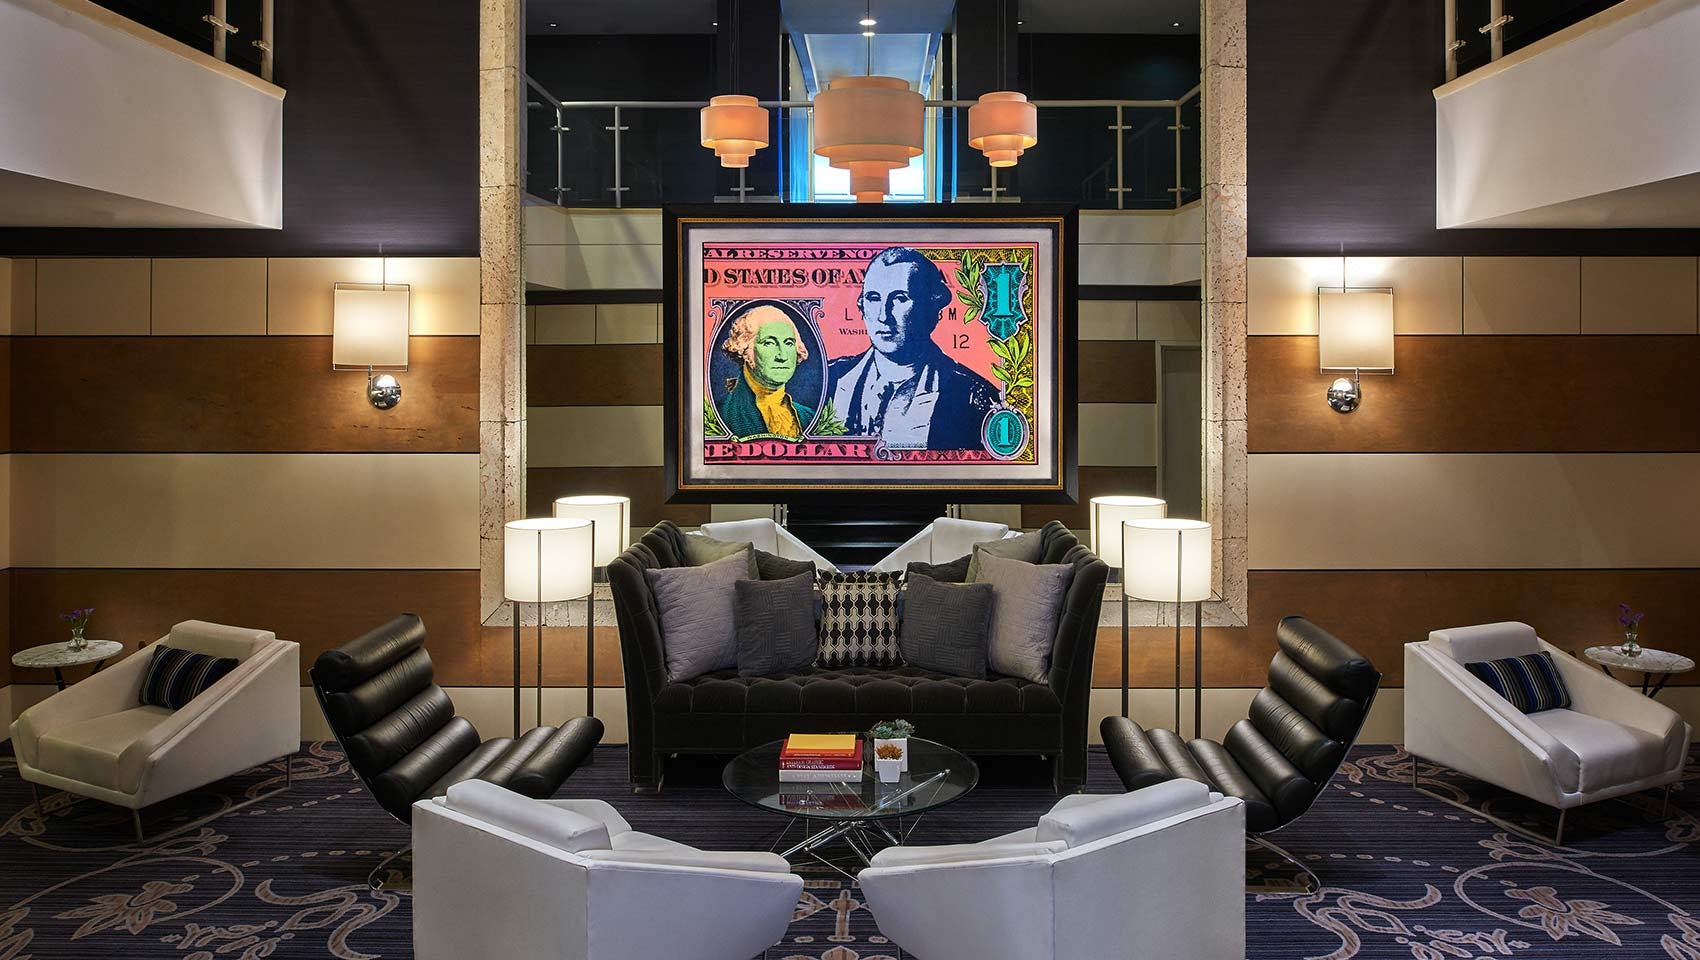 Hotel lobby with vibrant artwork